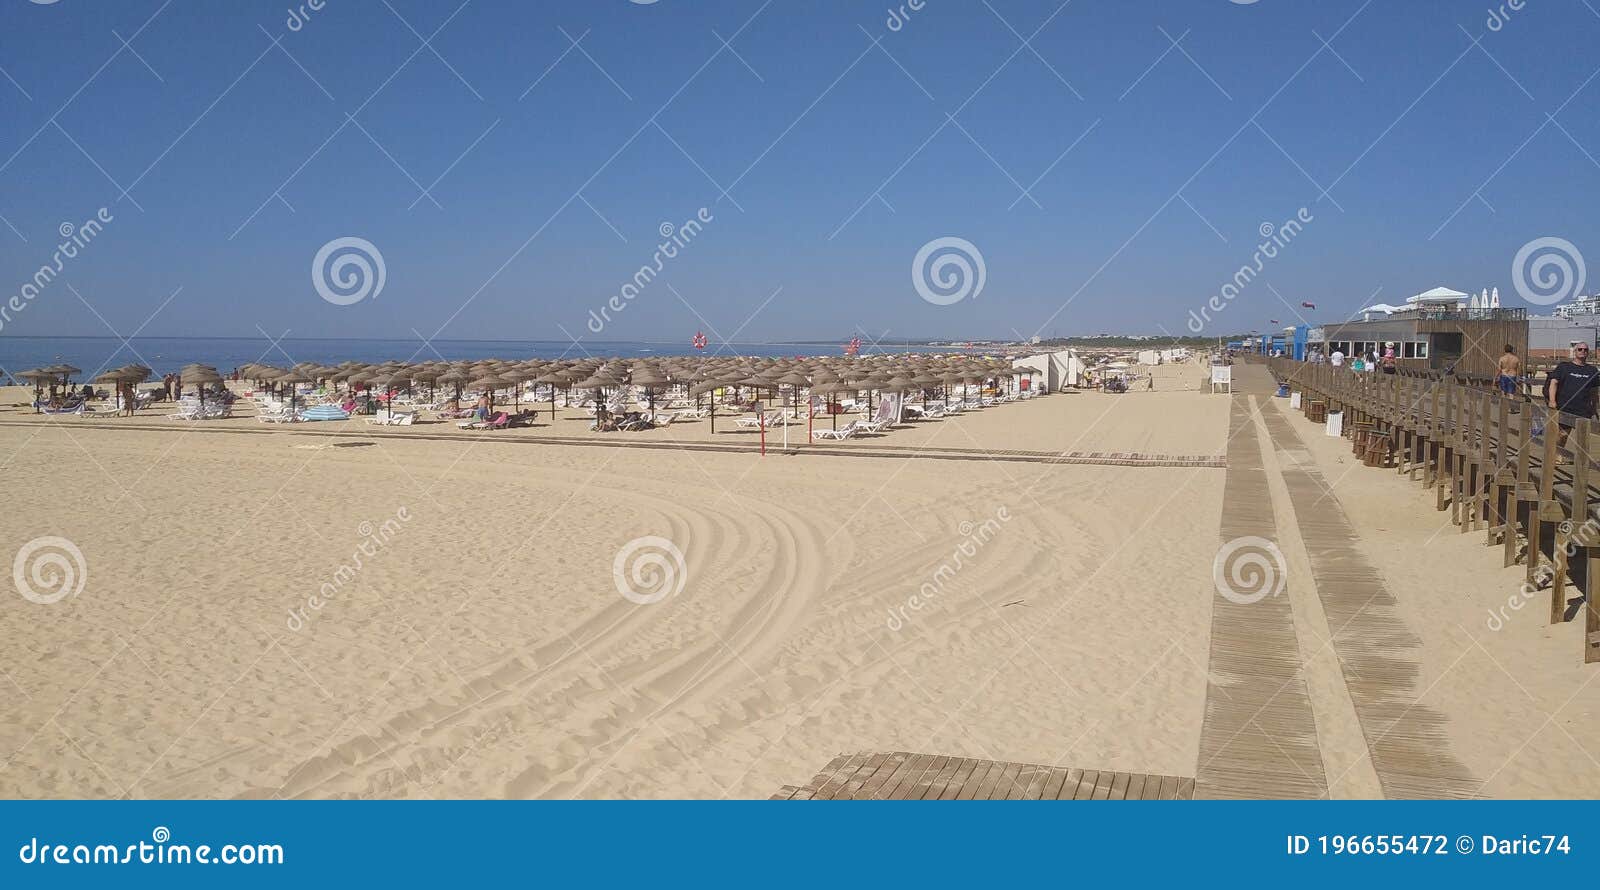 praia monte gordo beach, algarve, portugal